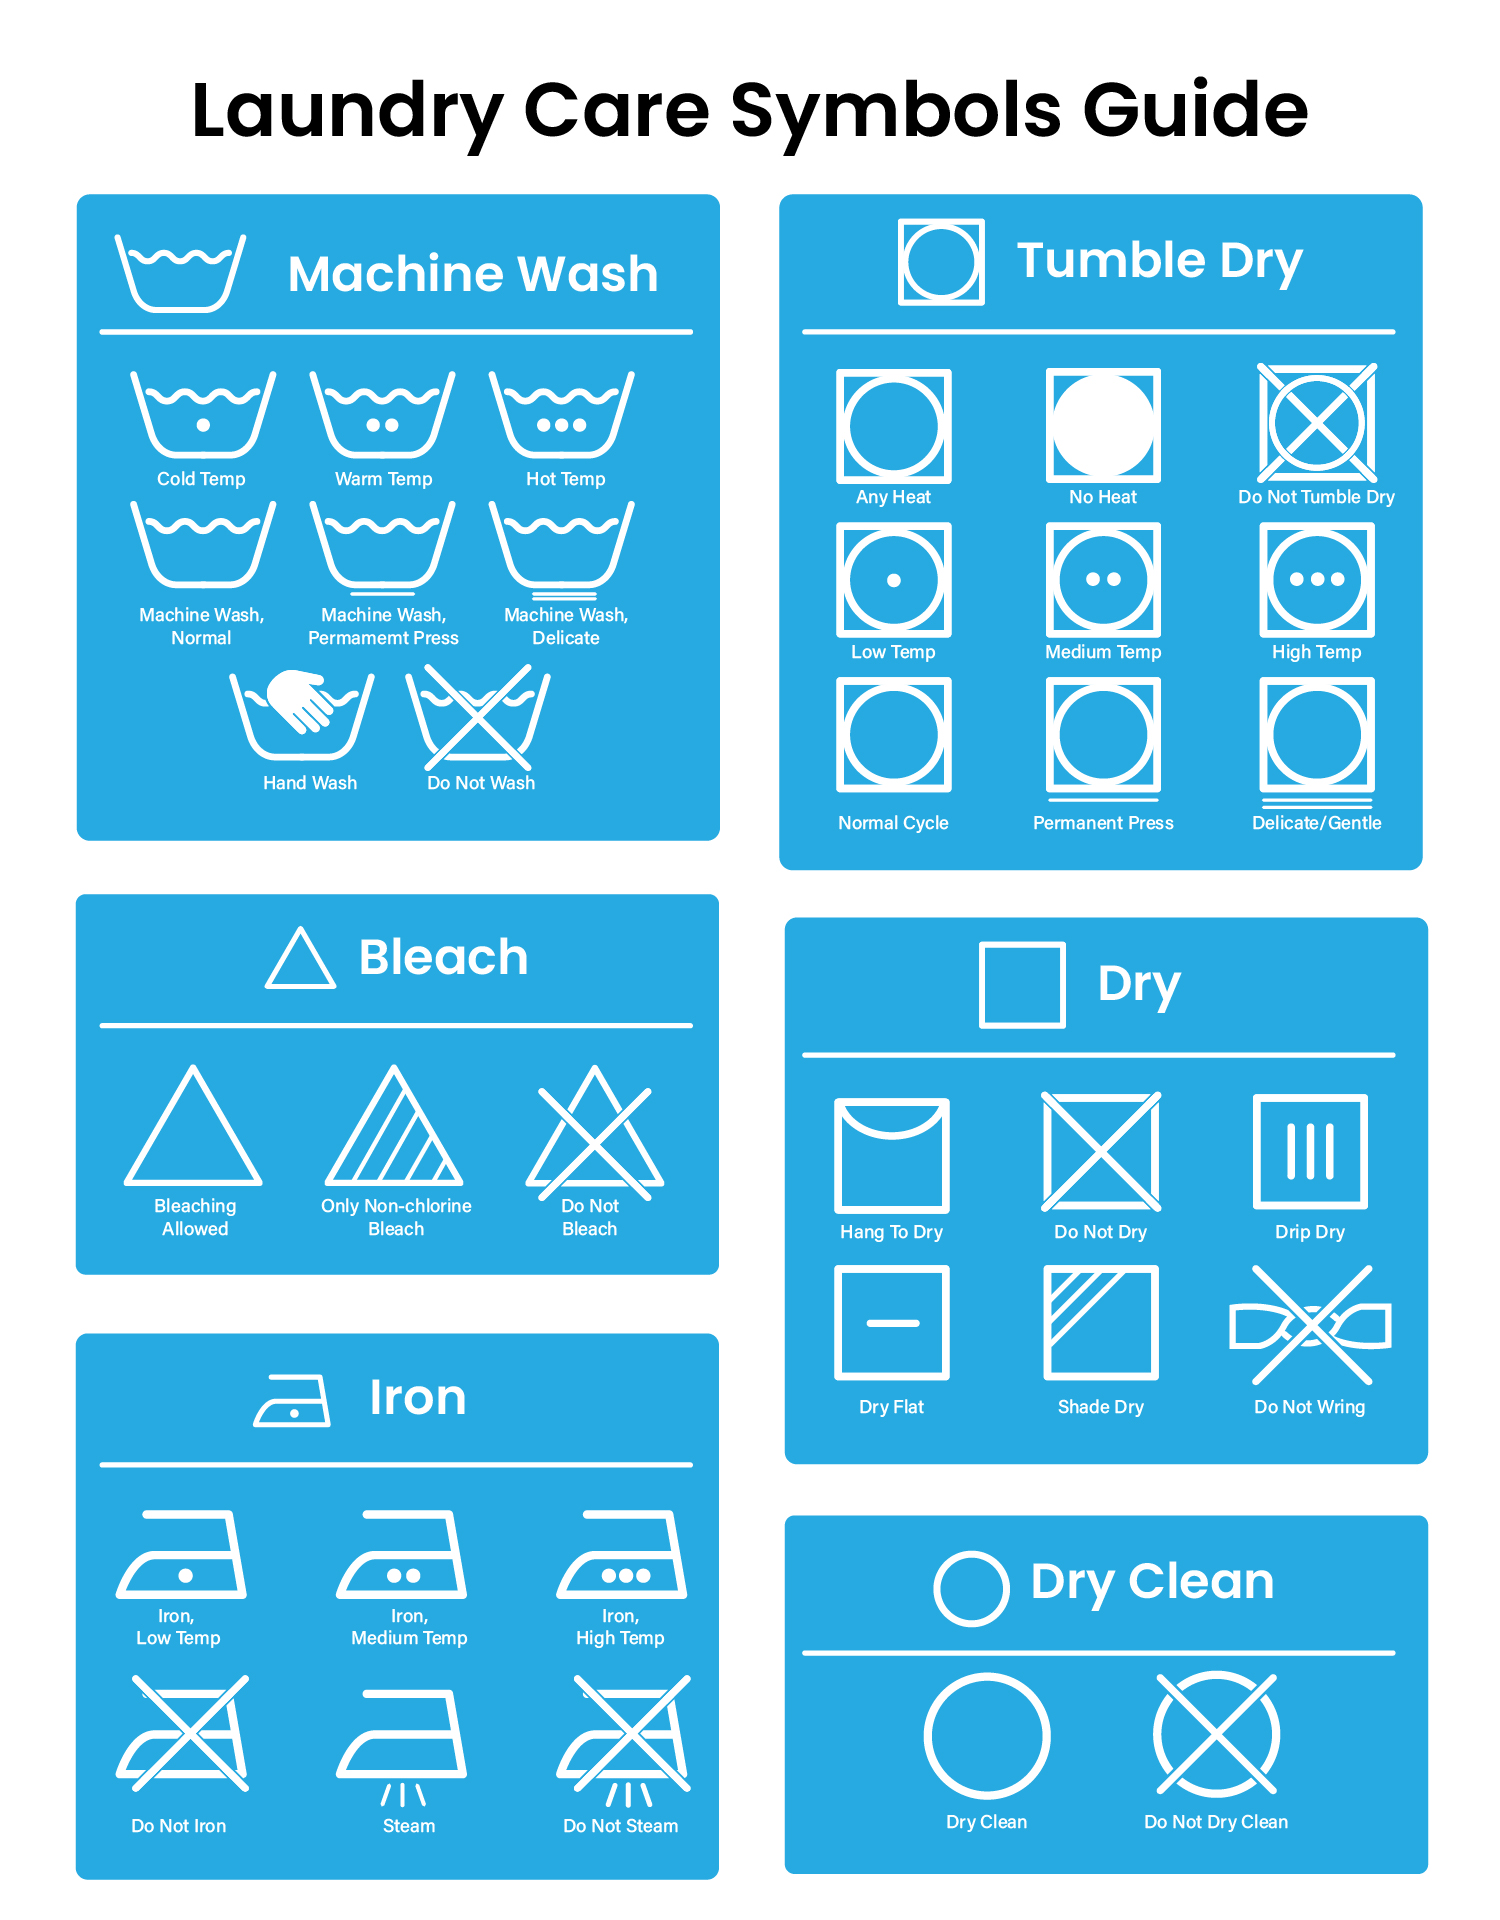 Fabric Softener for Laundry Care Symbols